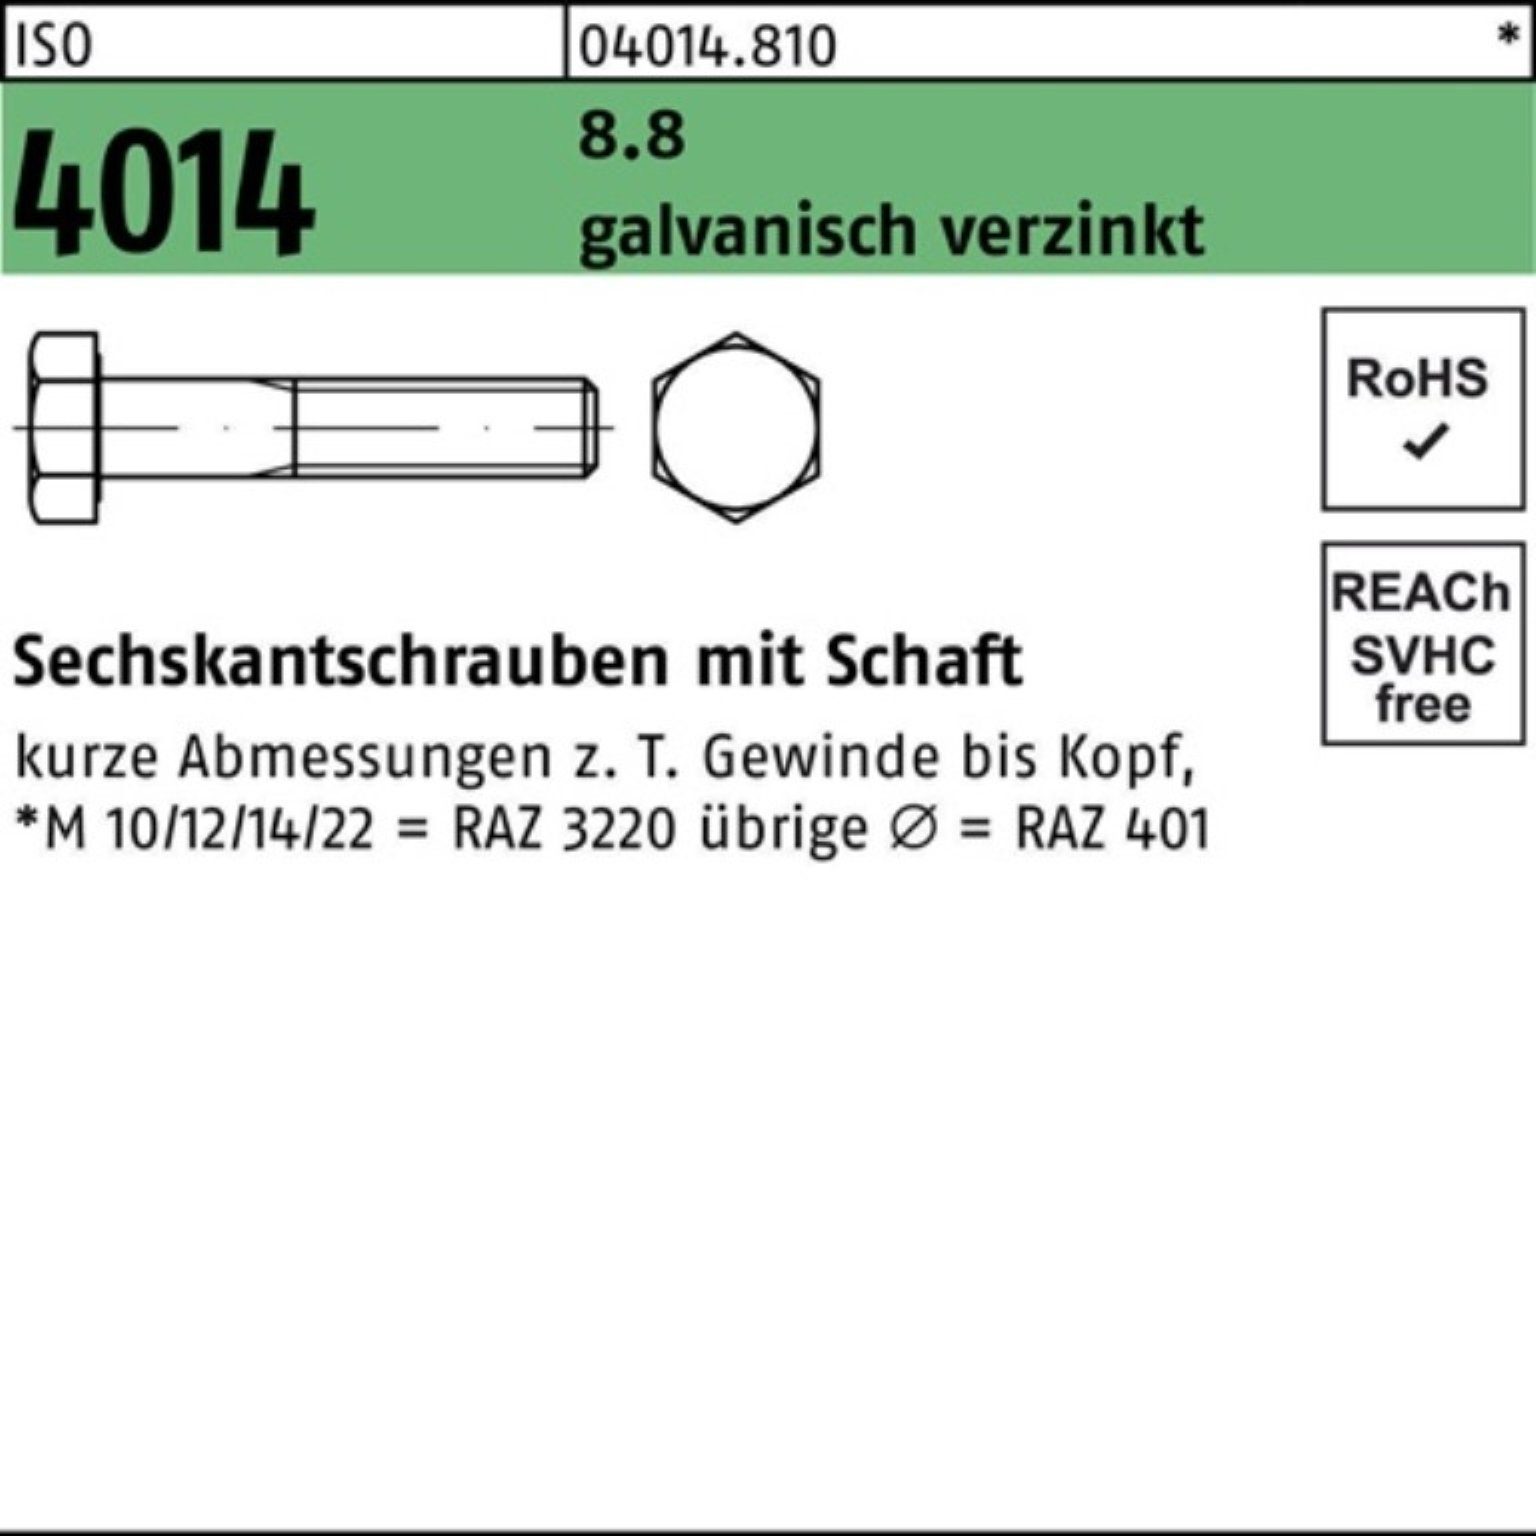 Bufab Sechskantschraube 100er Pack Sechskantschraube ISO 4014 Schaft M18x 240 8.8 galv.verz. 1 | Schrauben